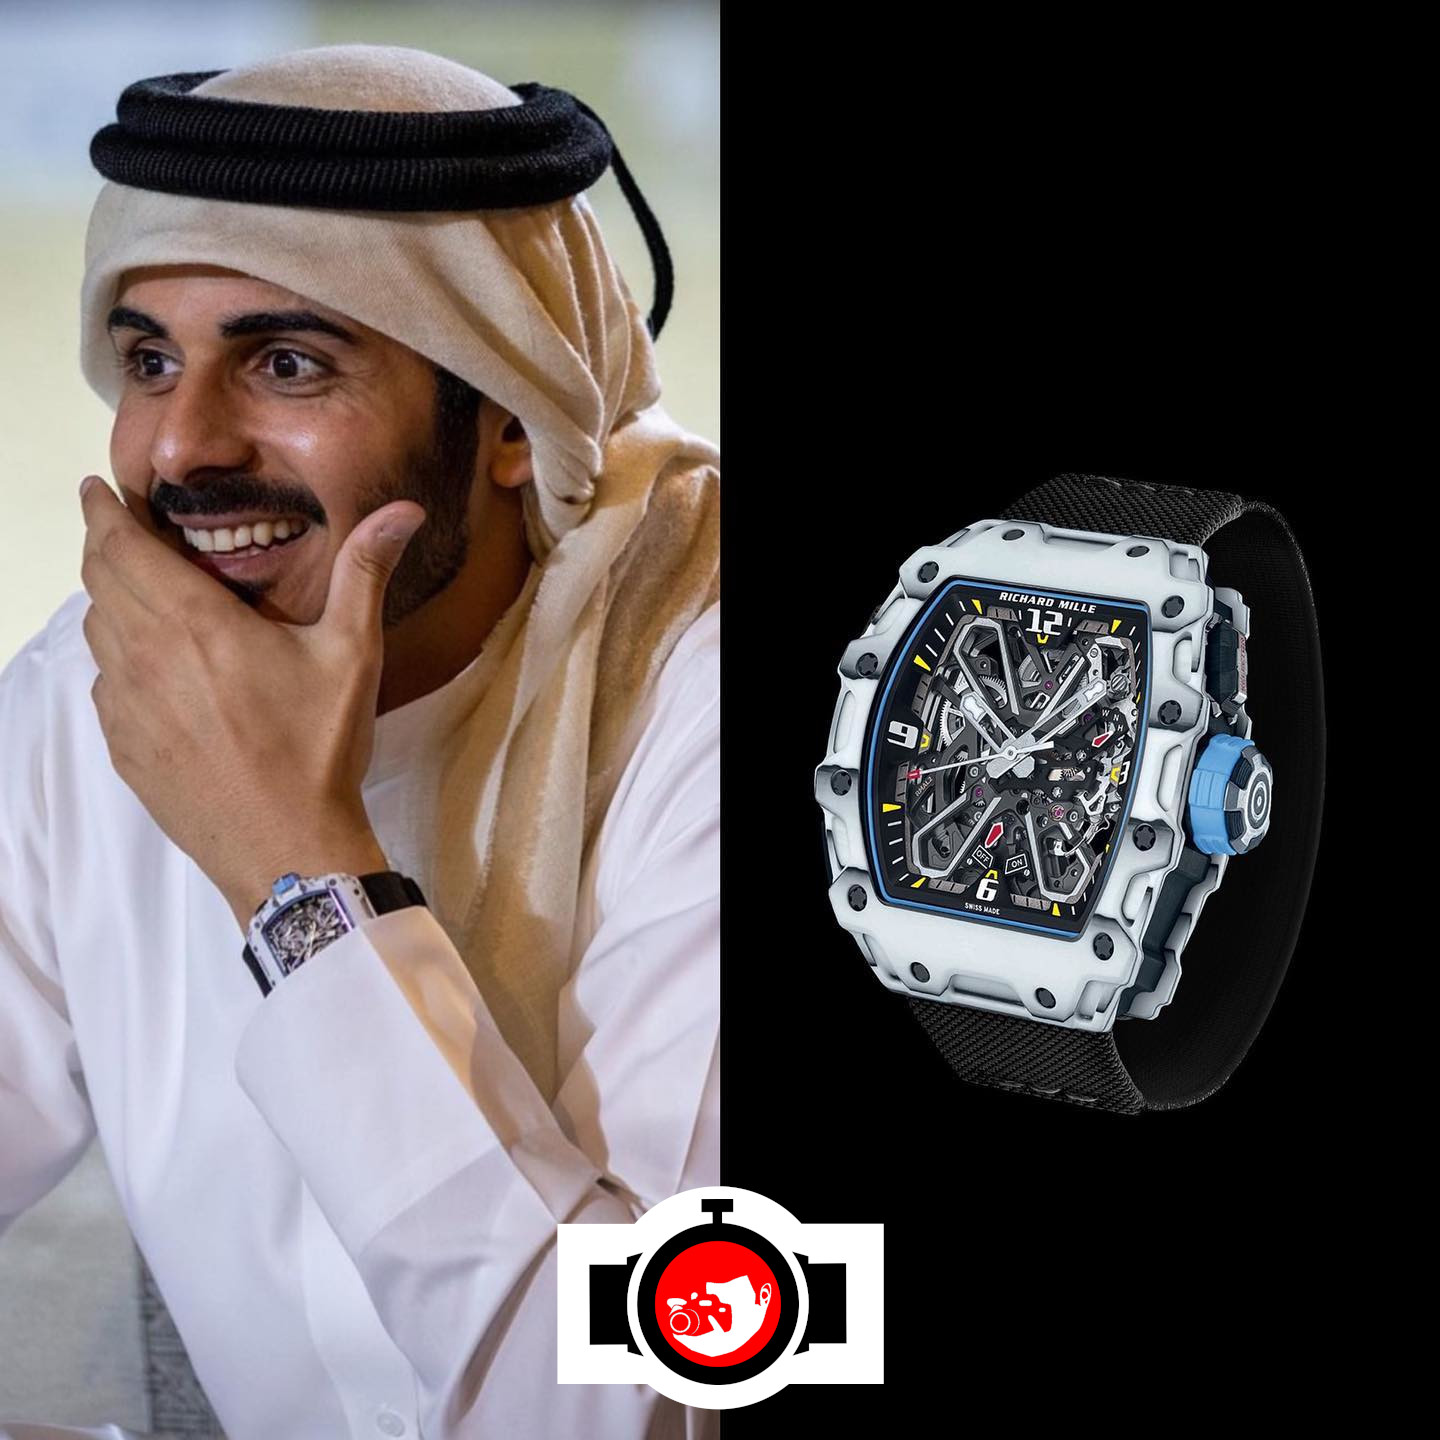 royal Khalifa Bin Hamad spotted wearing a Richard Mille RM 35